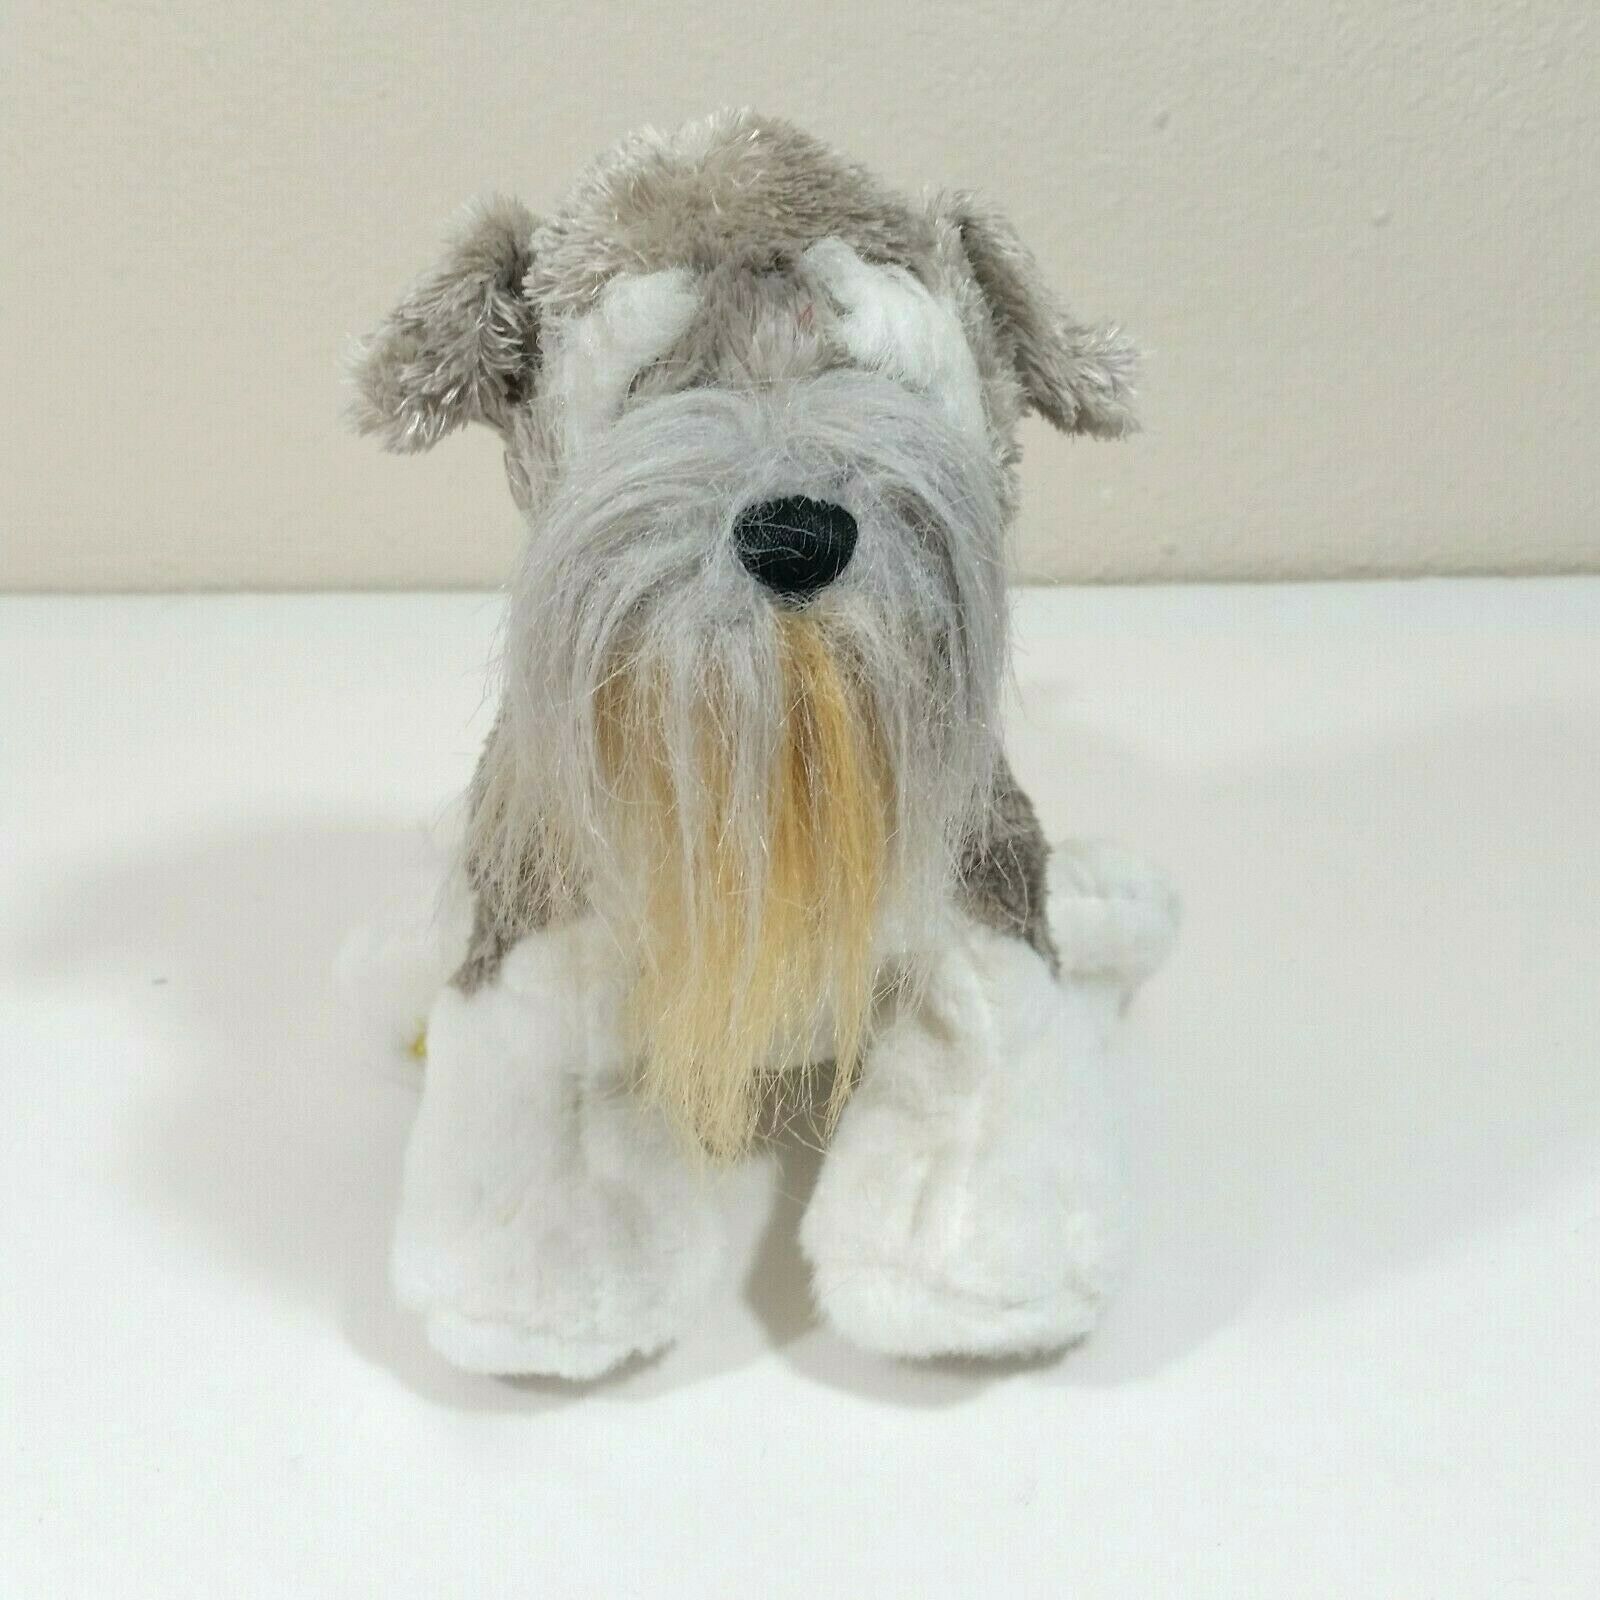 Ganz Webkinz Schnauzer 7 in Puppy Dog HM159 White Gray Stuffed Animal No Code - $11.41